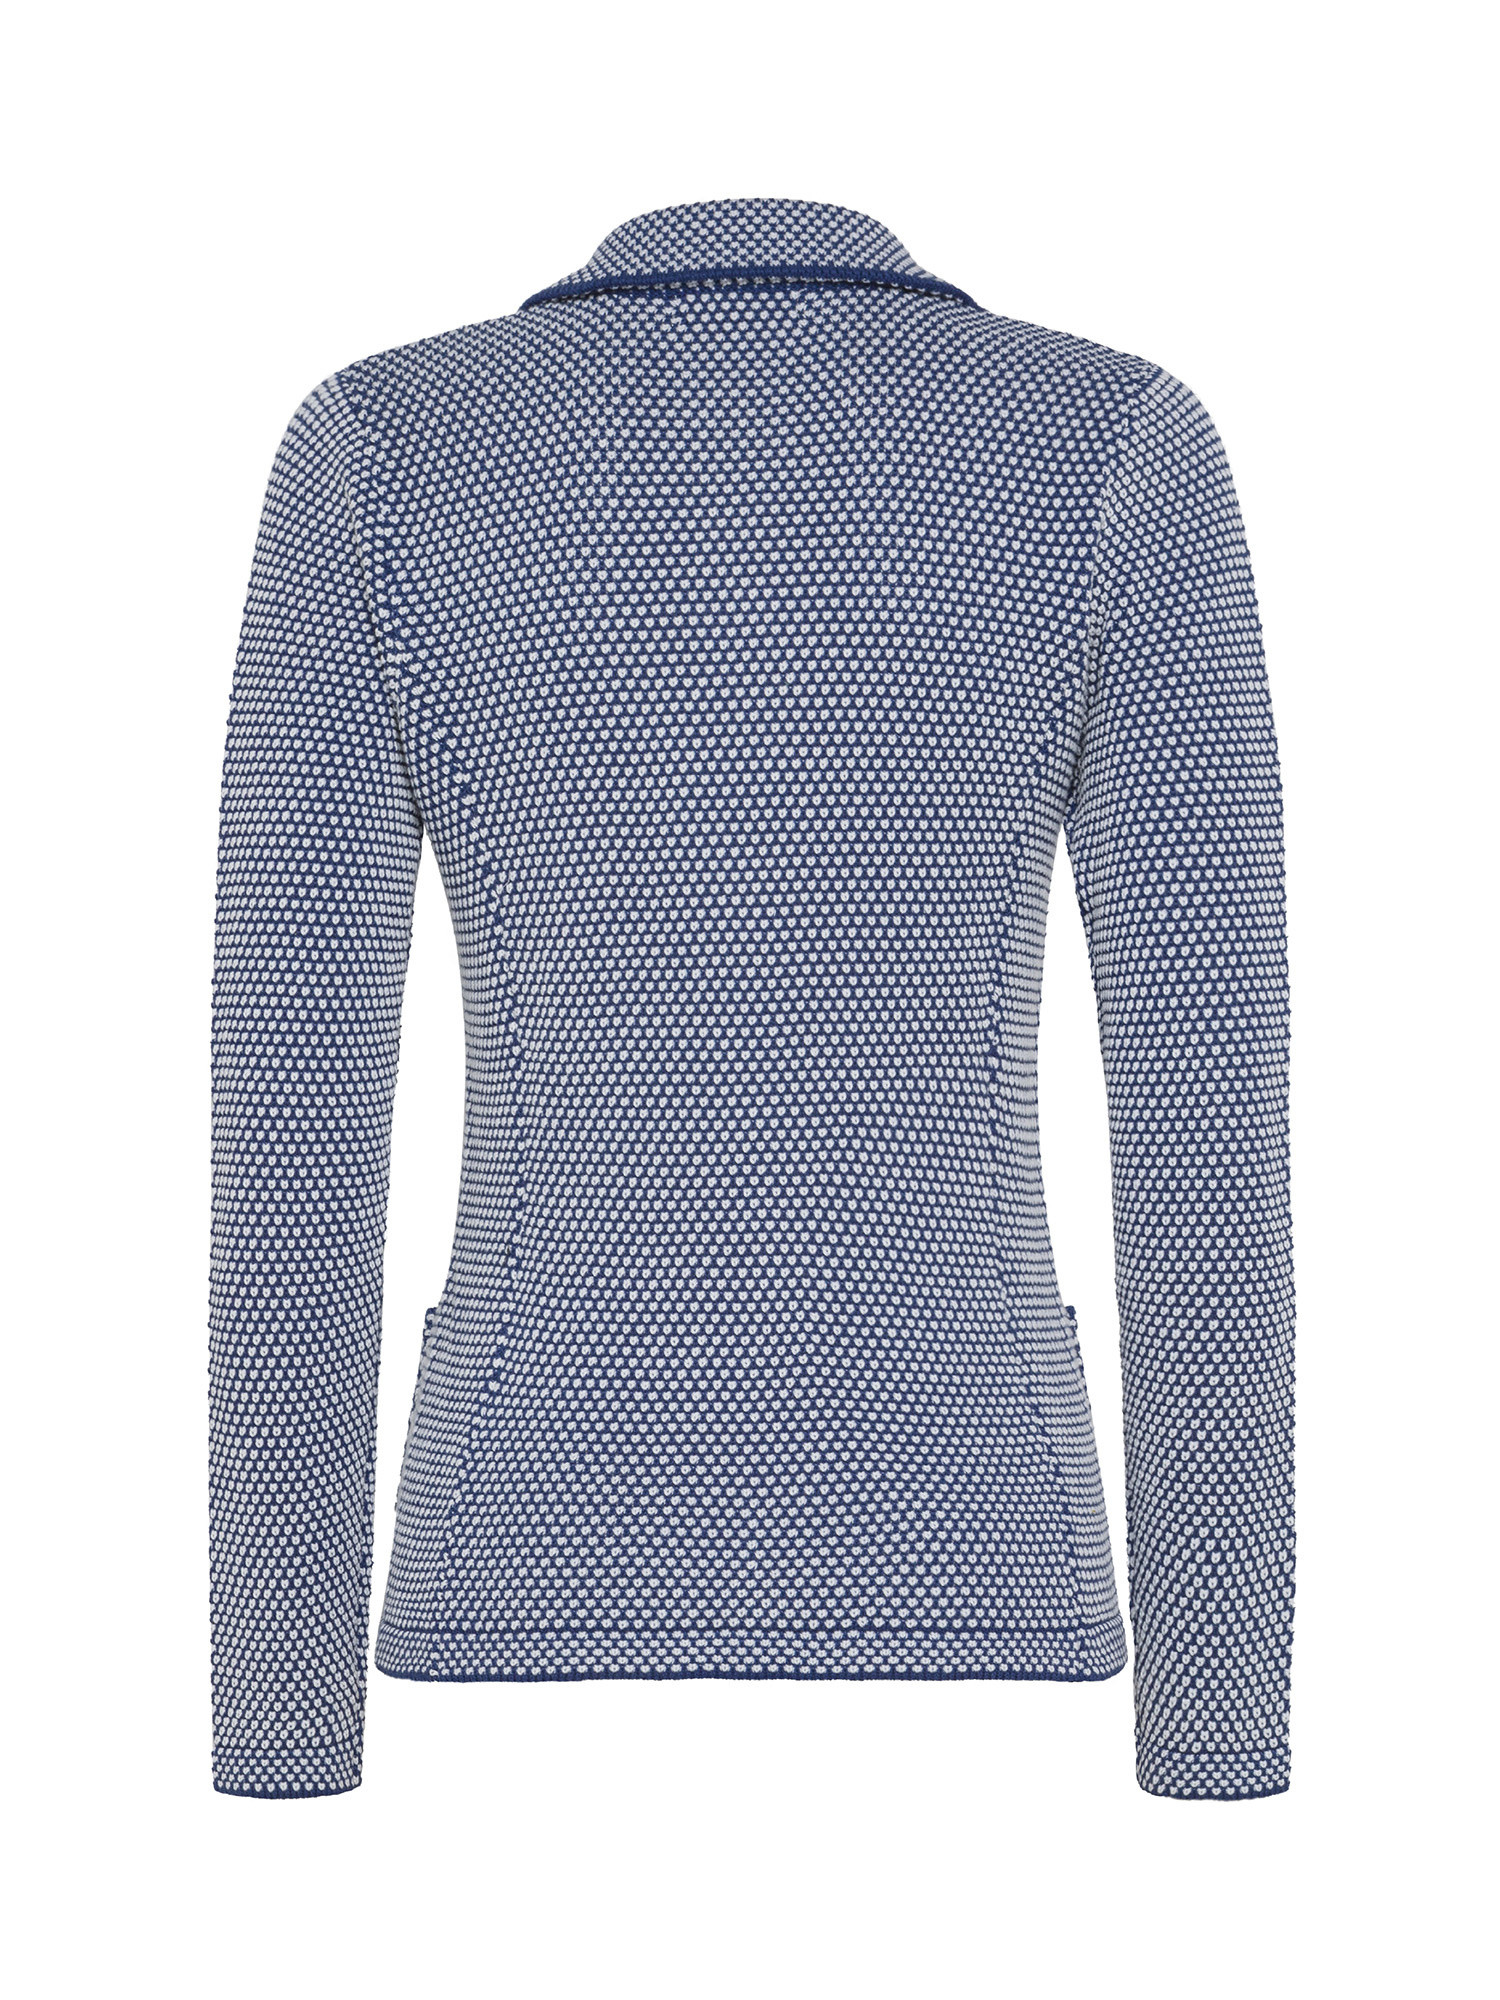 Koan - Bicolor rice stitch knit blazer in cotton, Blue, large image number 1